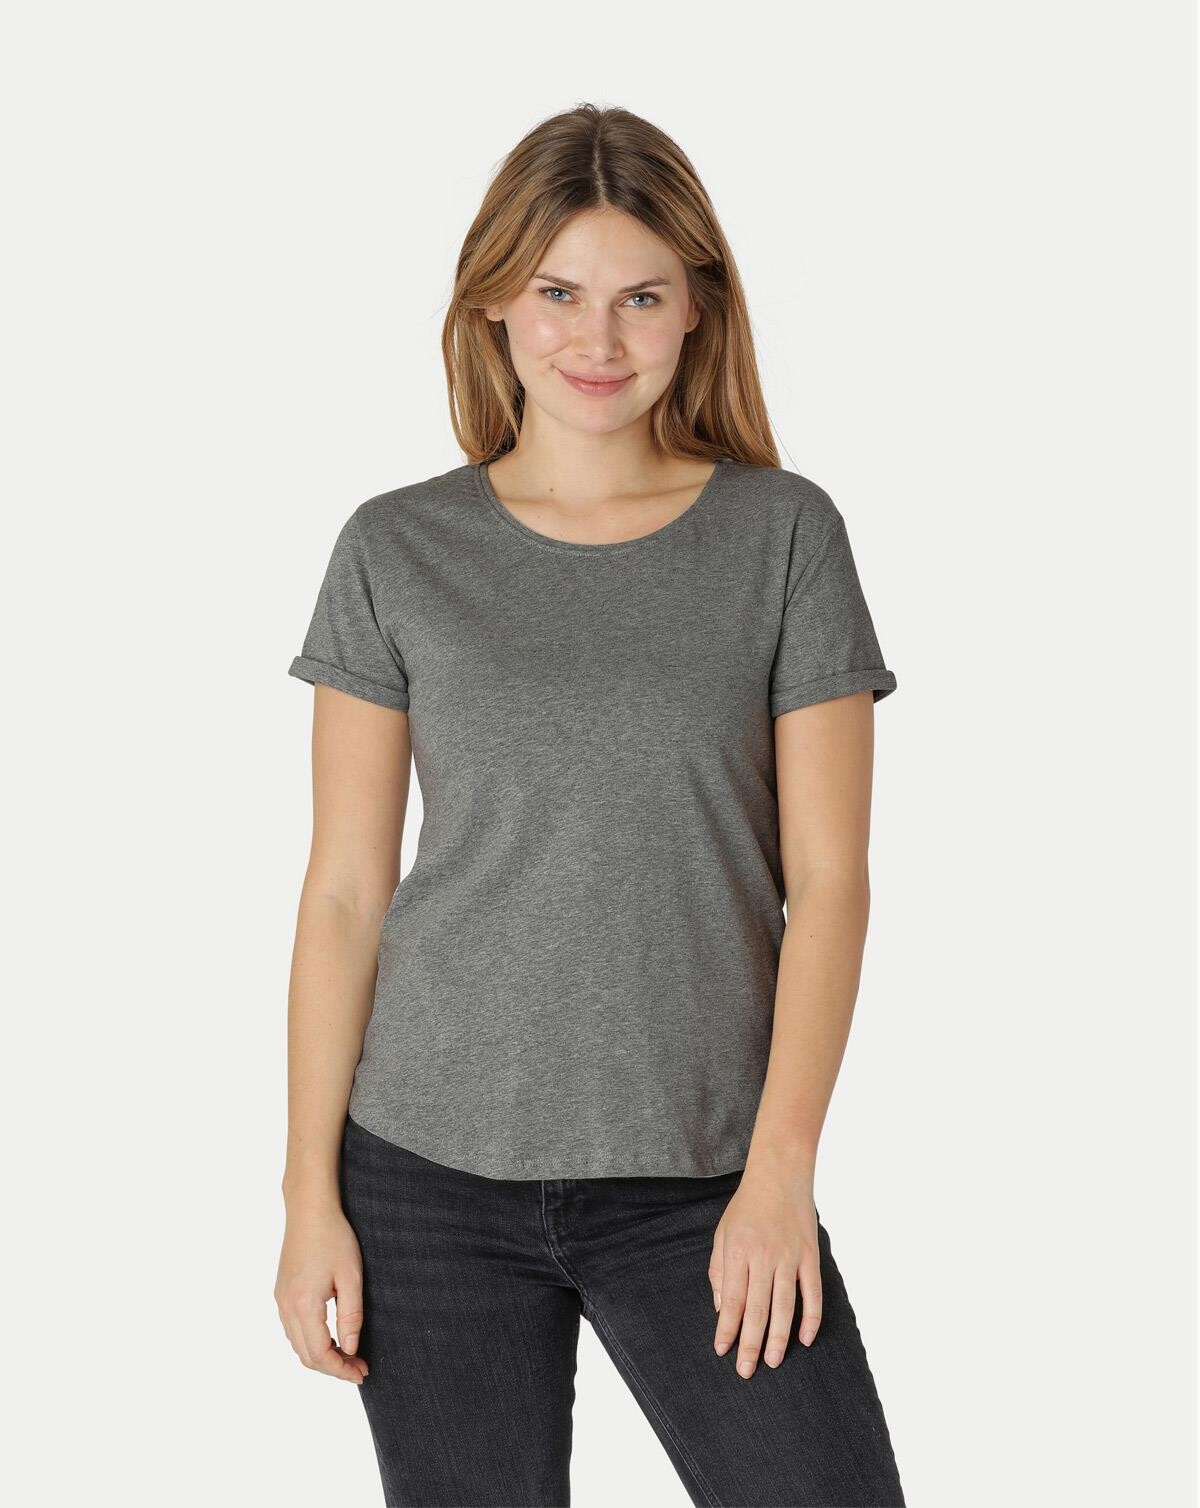 Neutral Organic - Ladies Roll Up Sleeve T-shirt (Charcoal, 2XL)